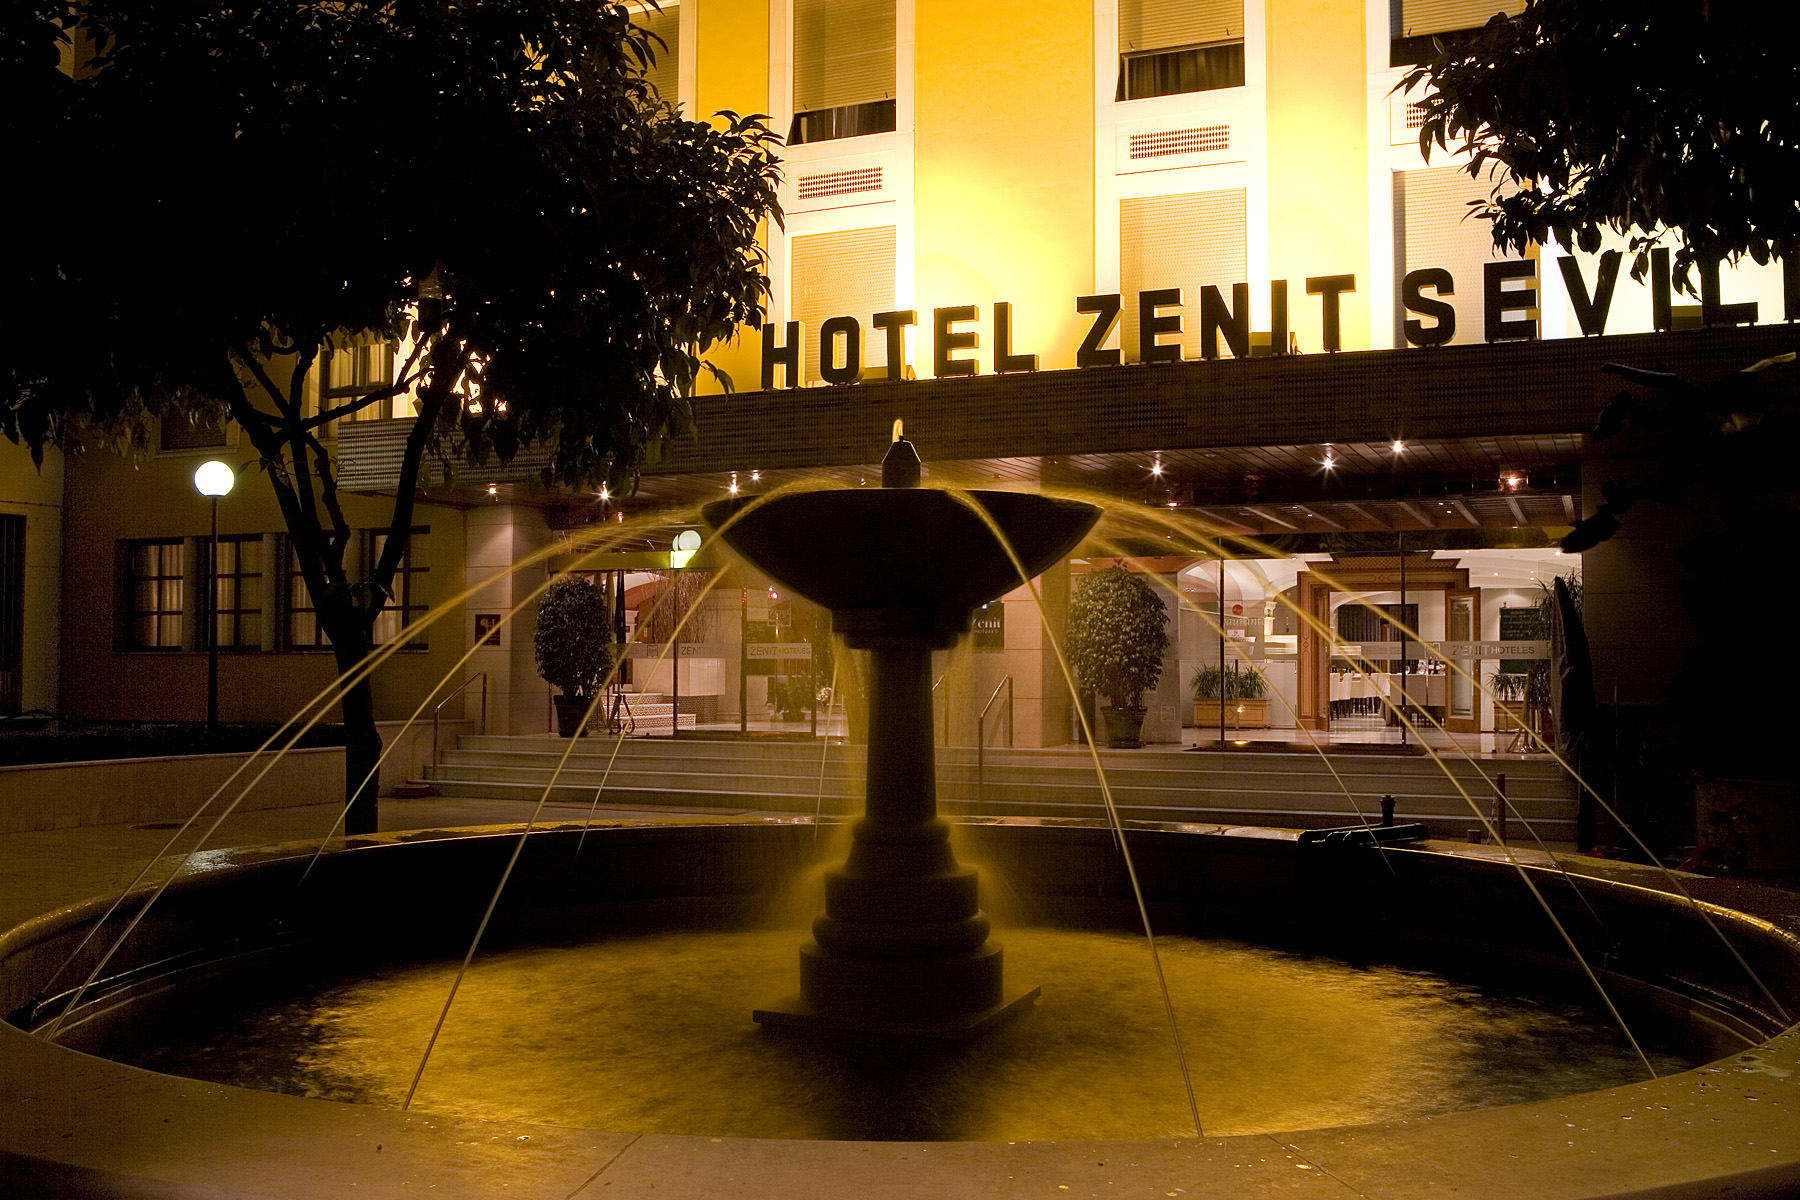 Zenit Hoteles se encuentran en toda España